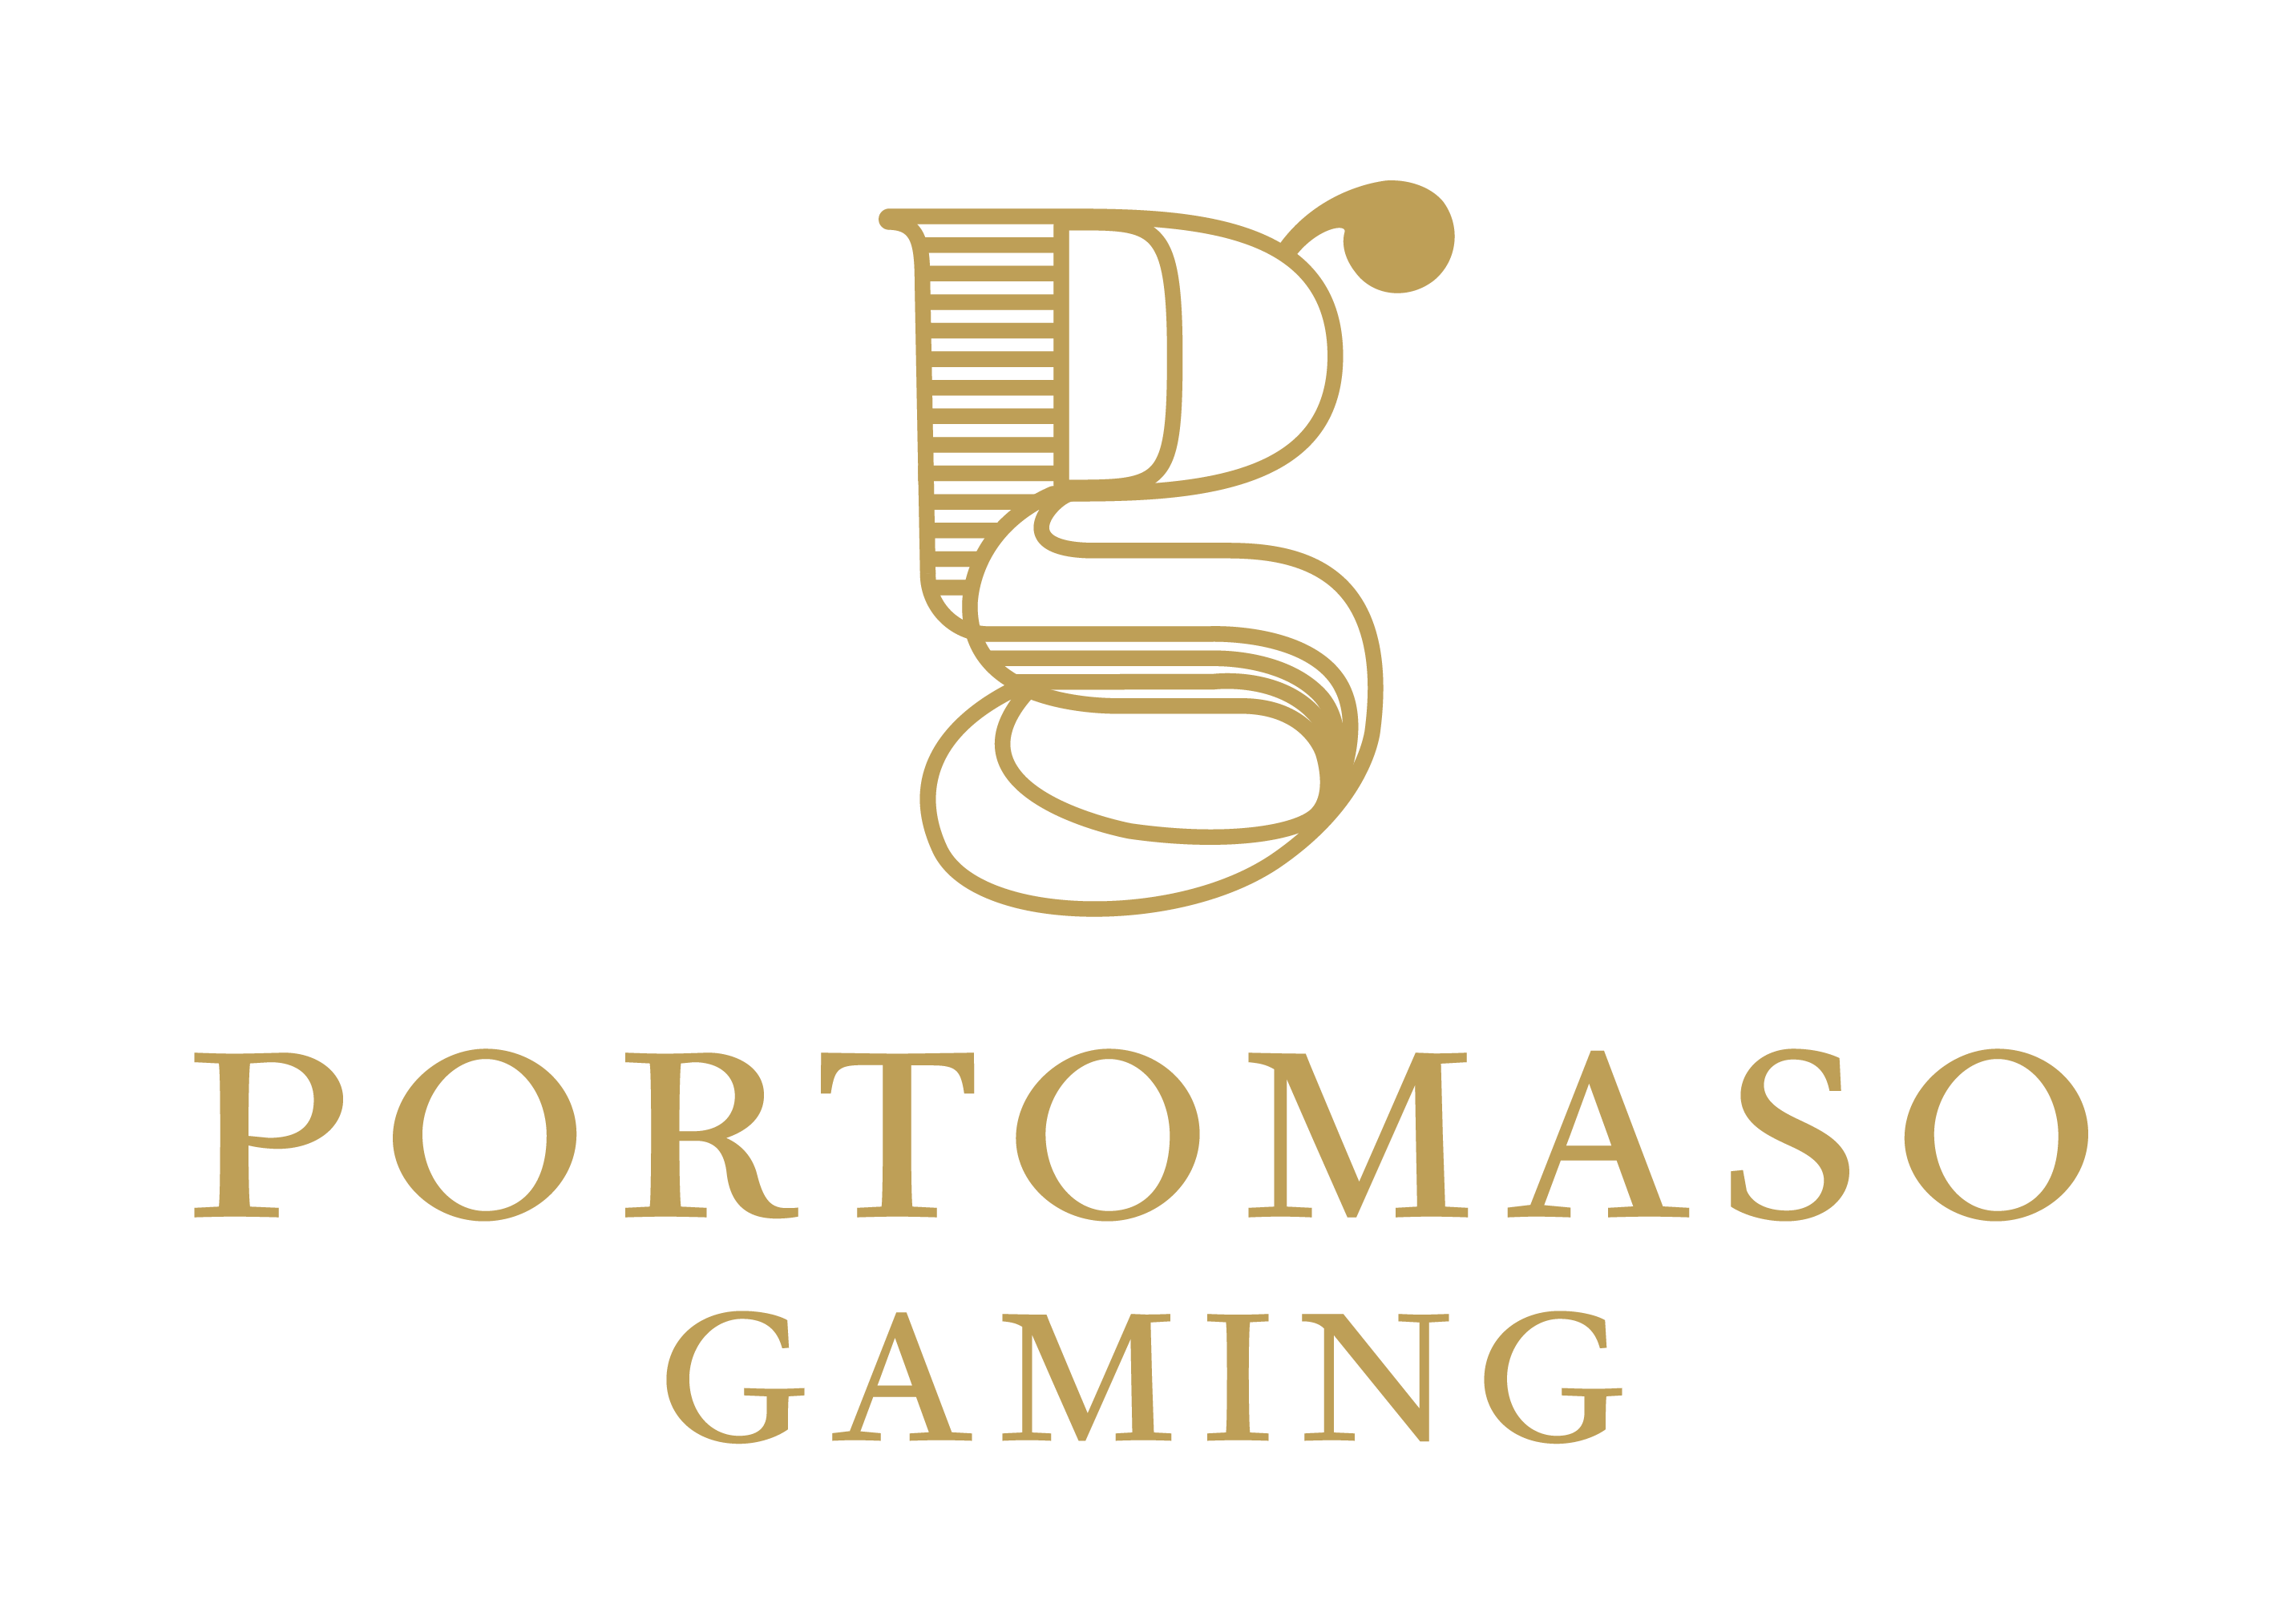 Portomaso Gaming juegos